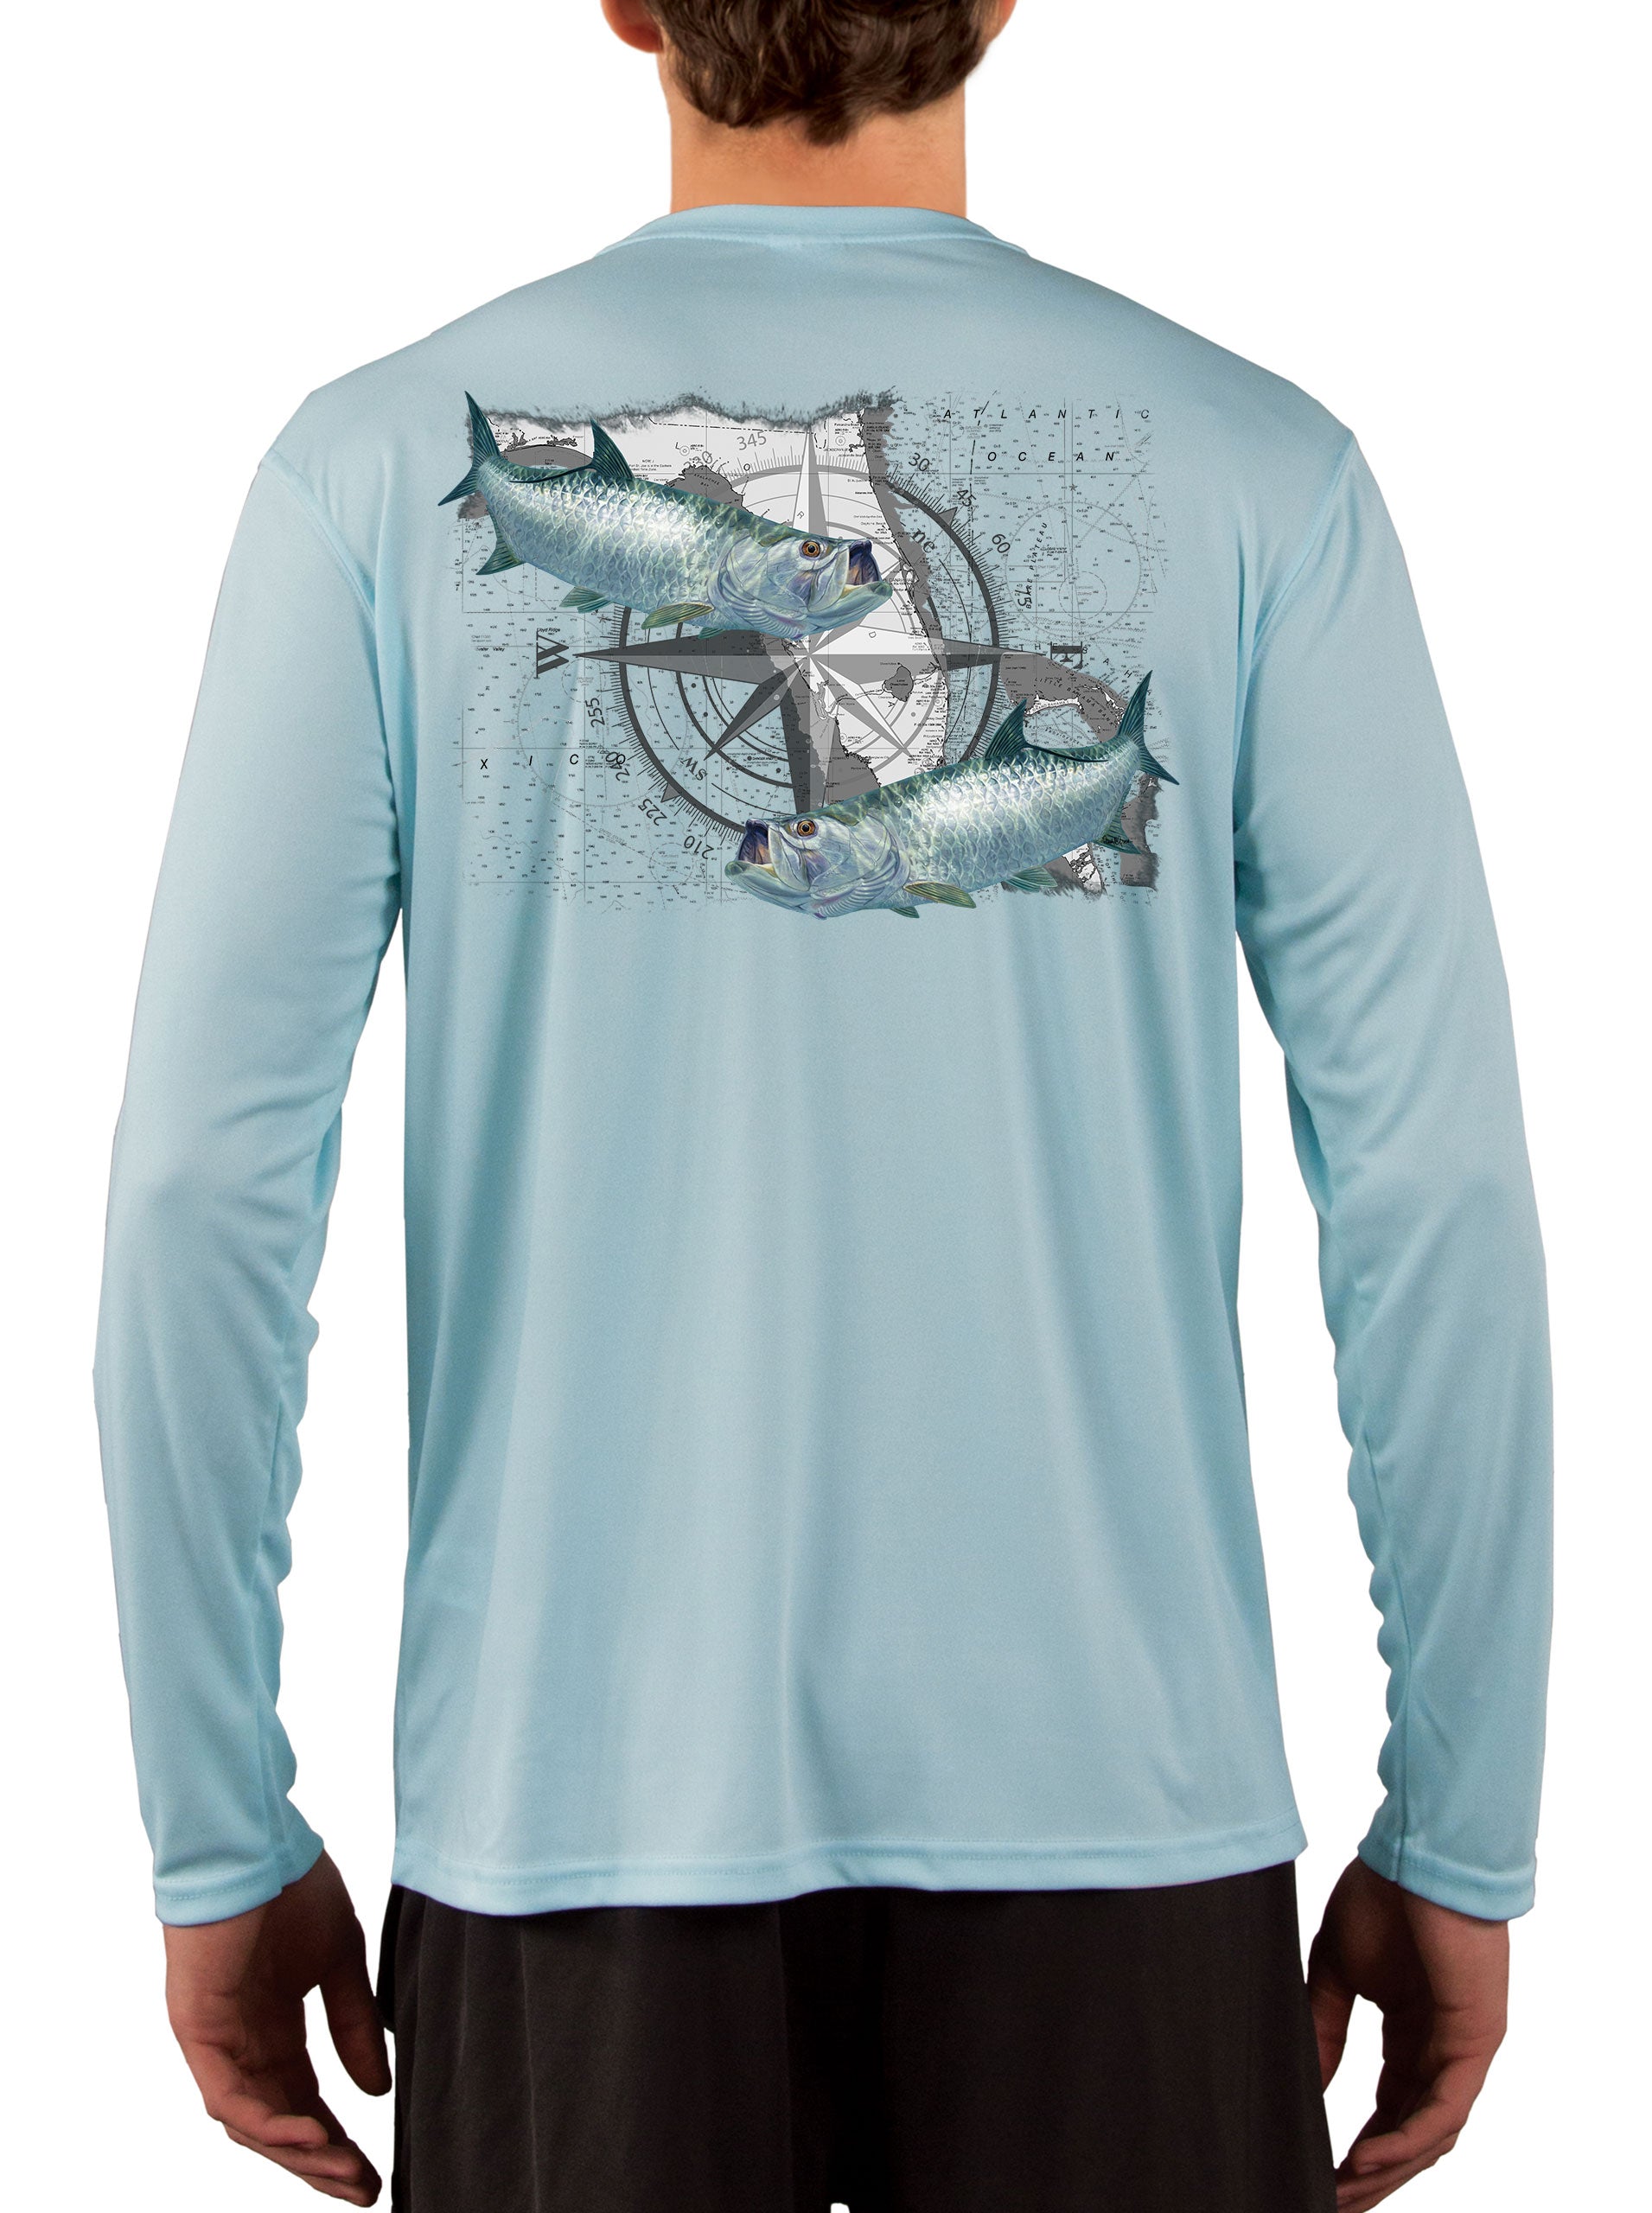  Fishing Shirts